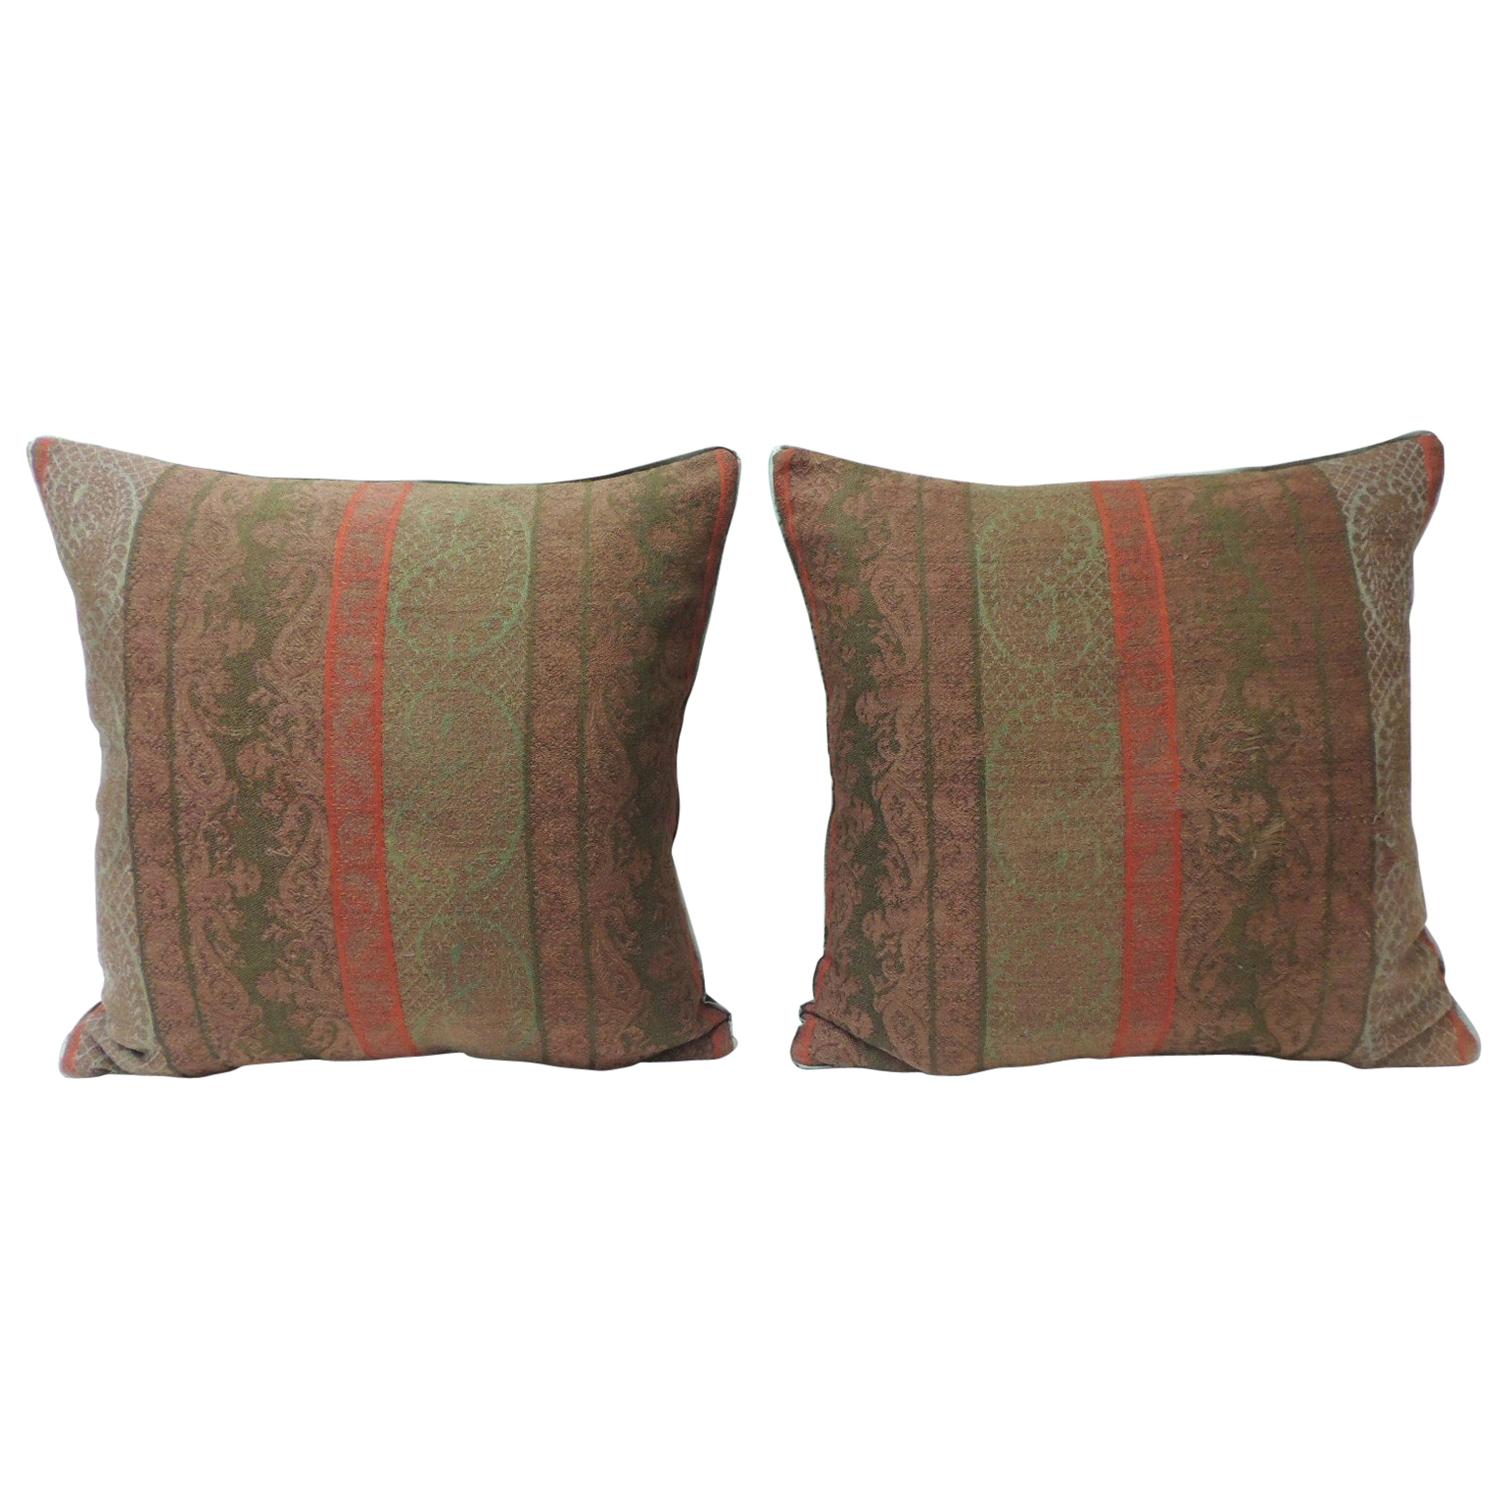 Pair of Antique Woven Red Kashmir Paisley Square Decorative Pillows